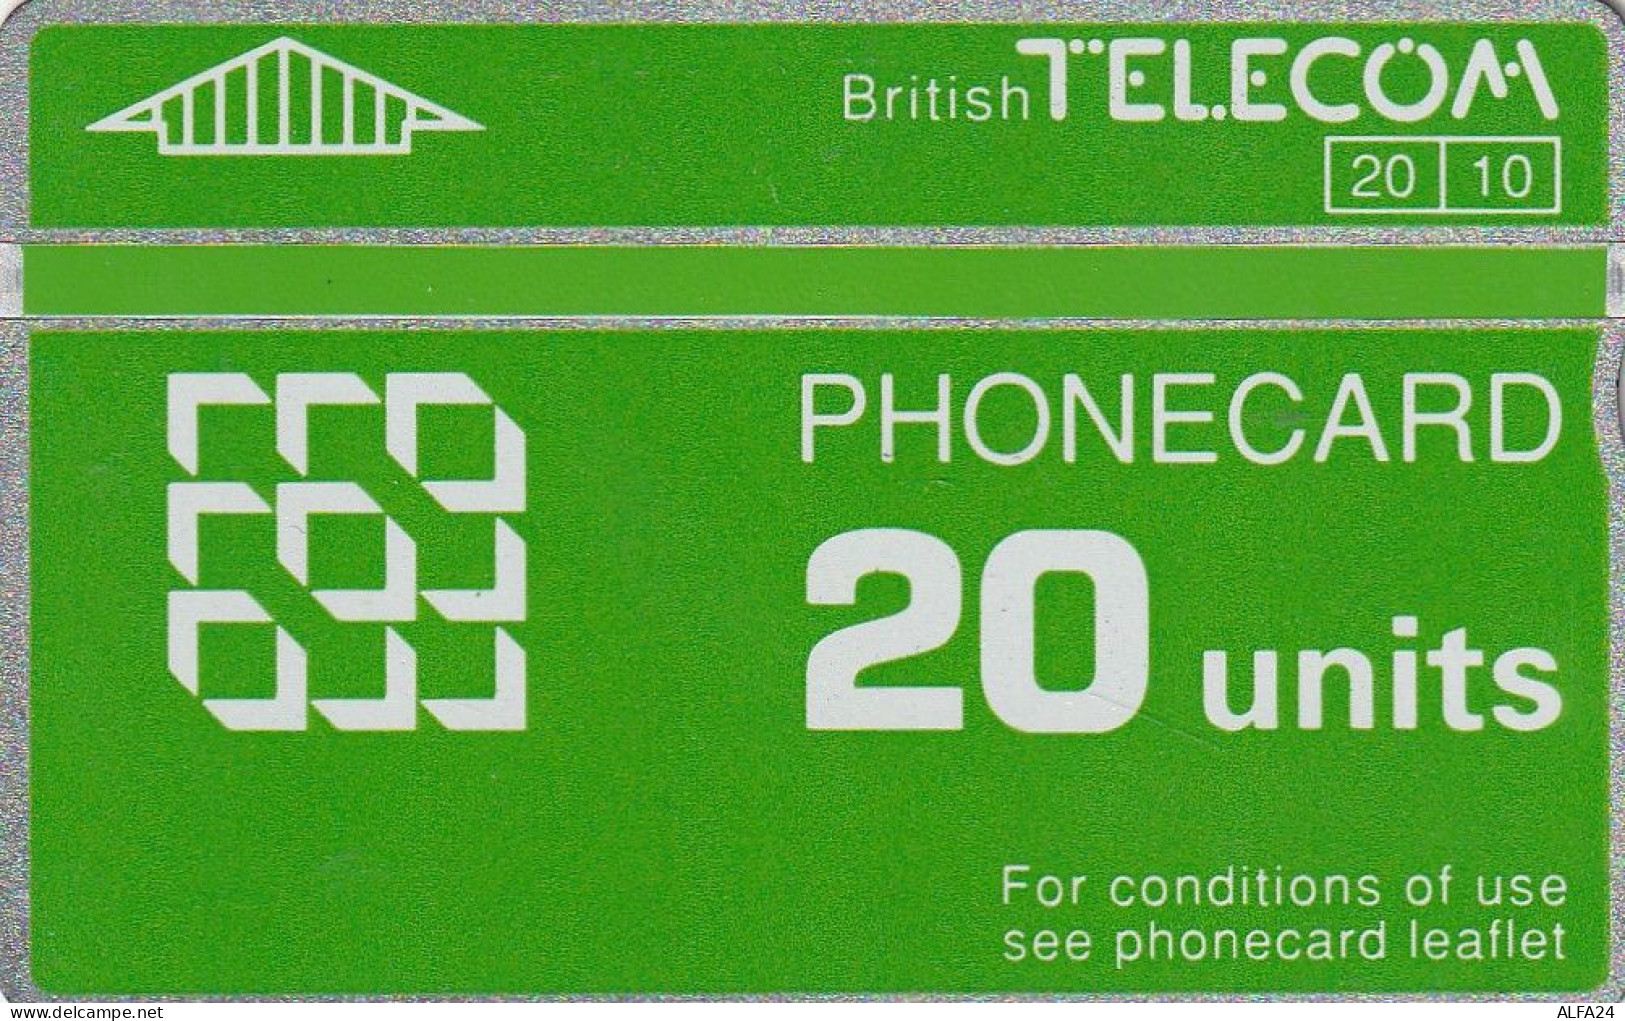 PHONE CARD UK LG (CZ1718 - BT Edición General